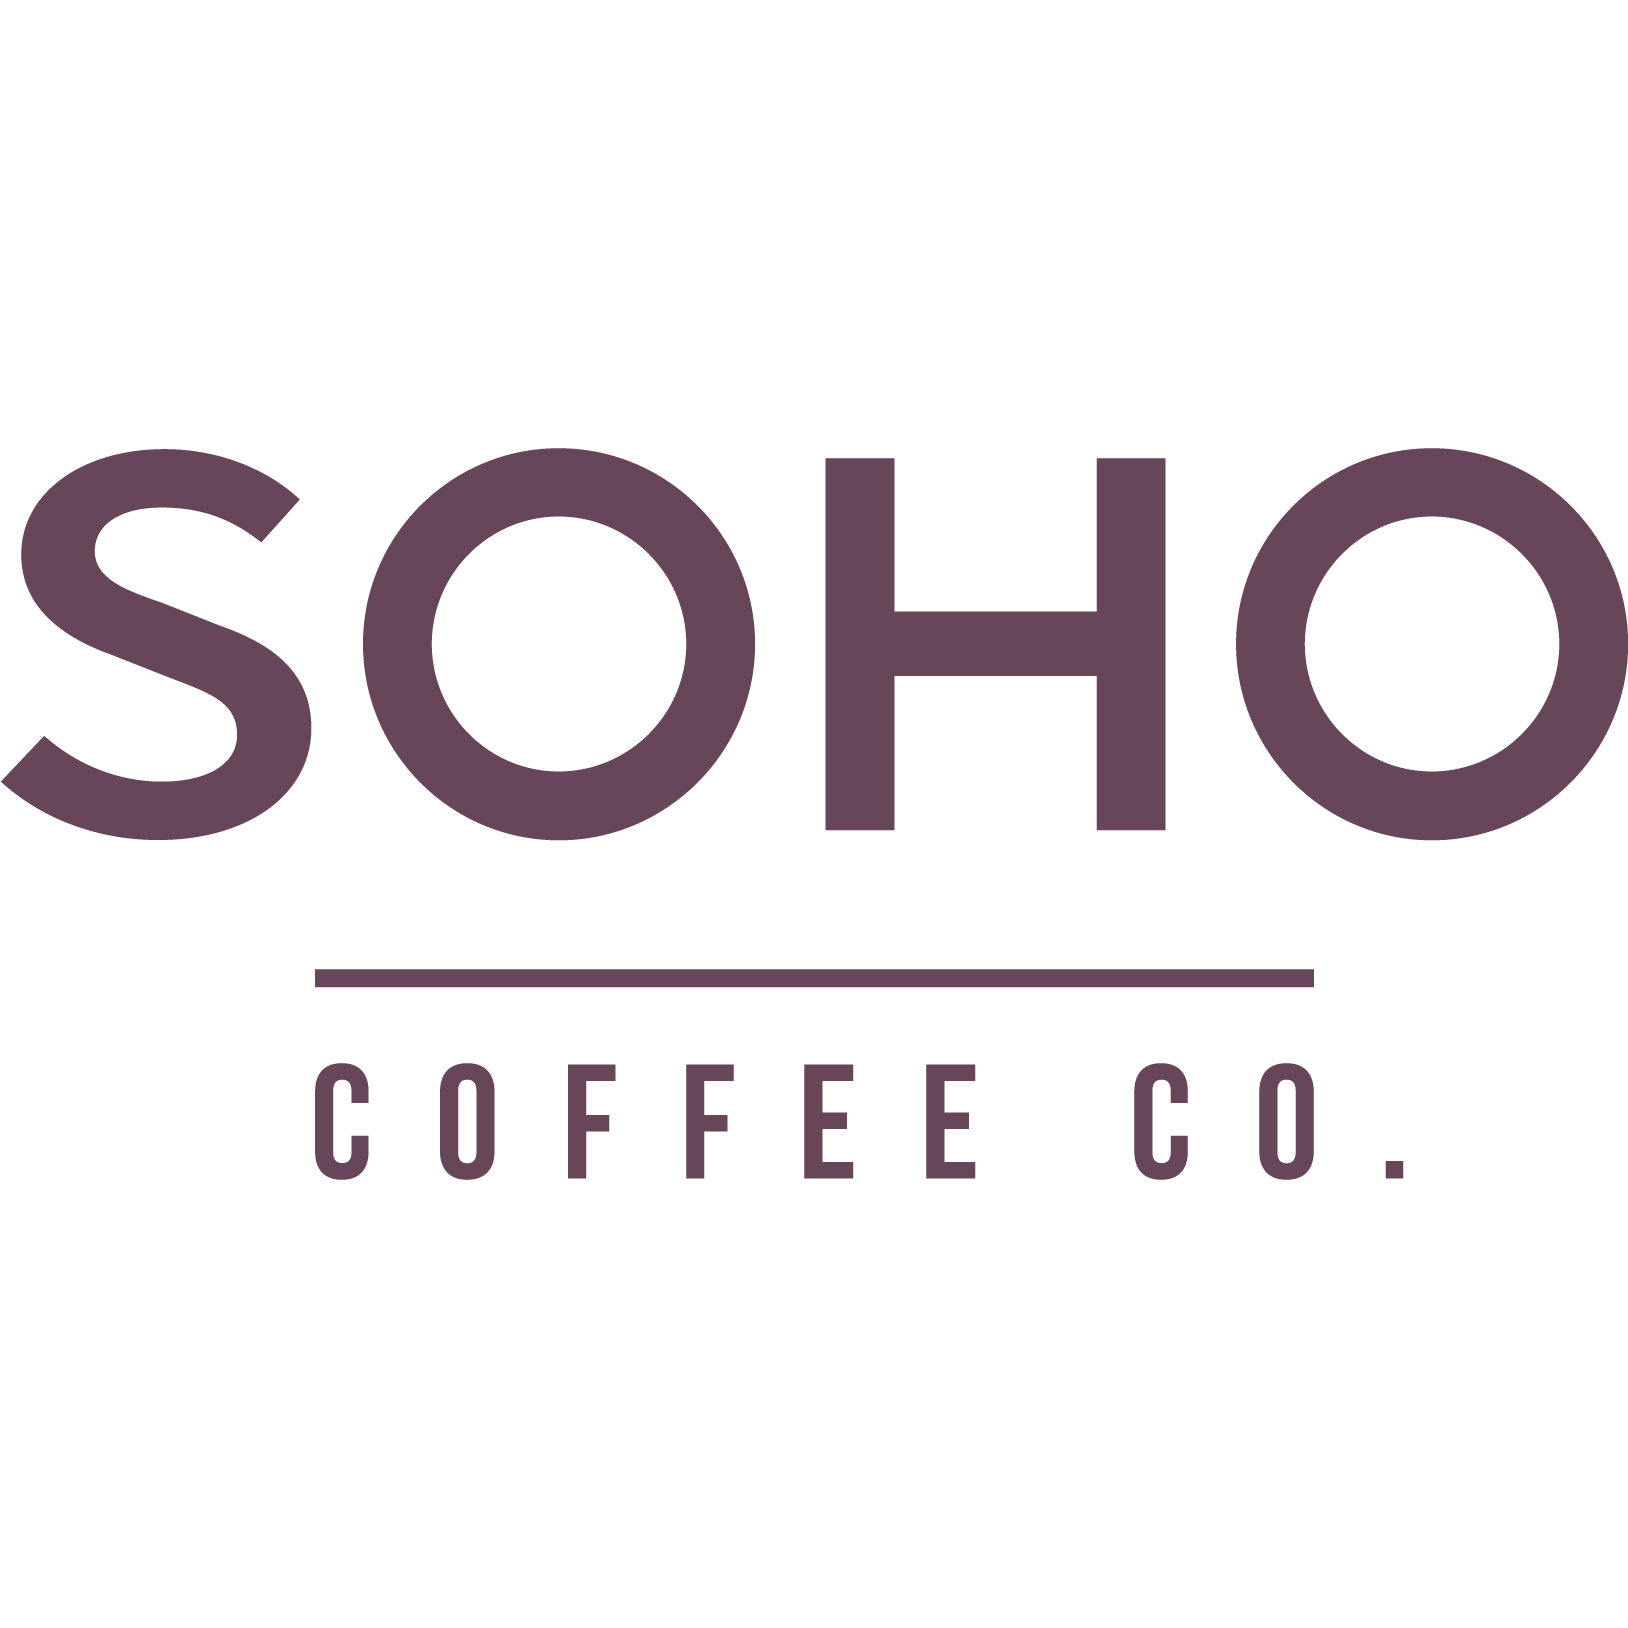 SOHO Coffee - Bristol, Bristol BS48 3DY - 01275 774287 | ShowMeLocal.com